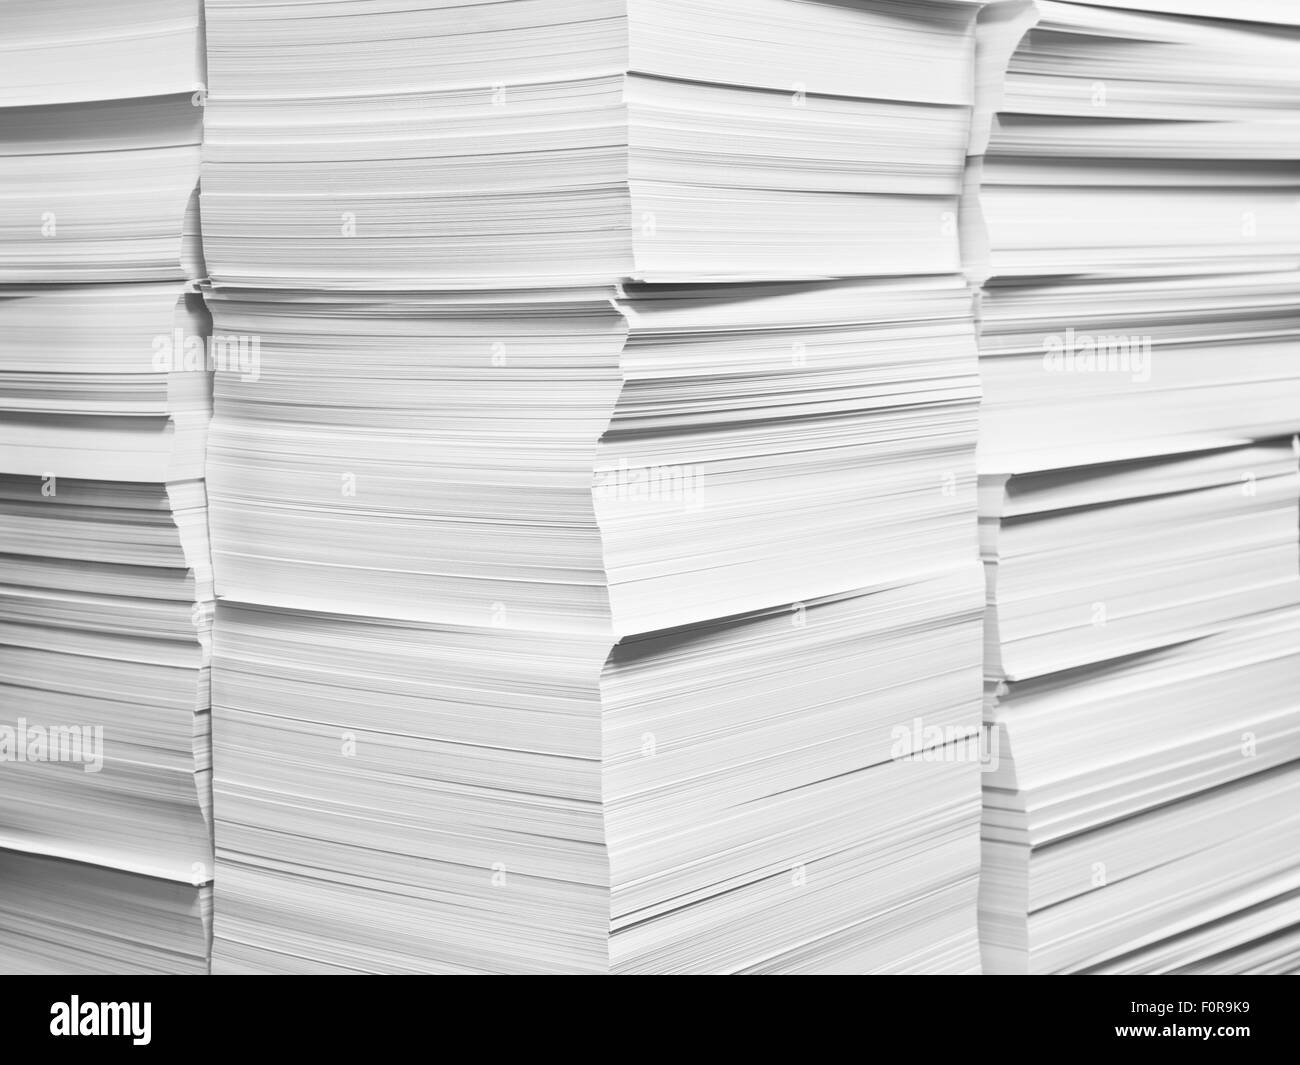 Stacks of freshly cut white paper Stock Photo